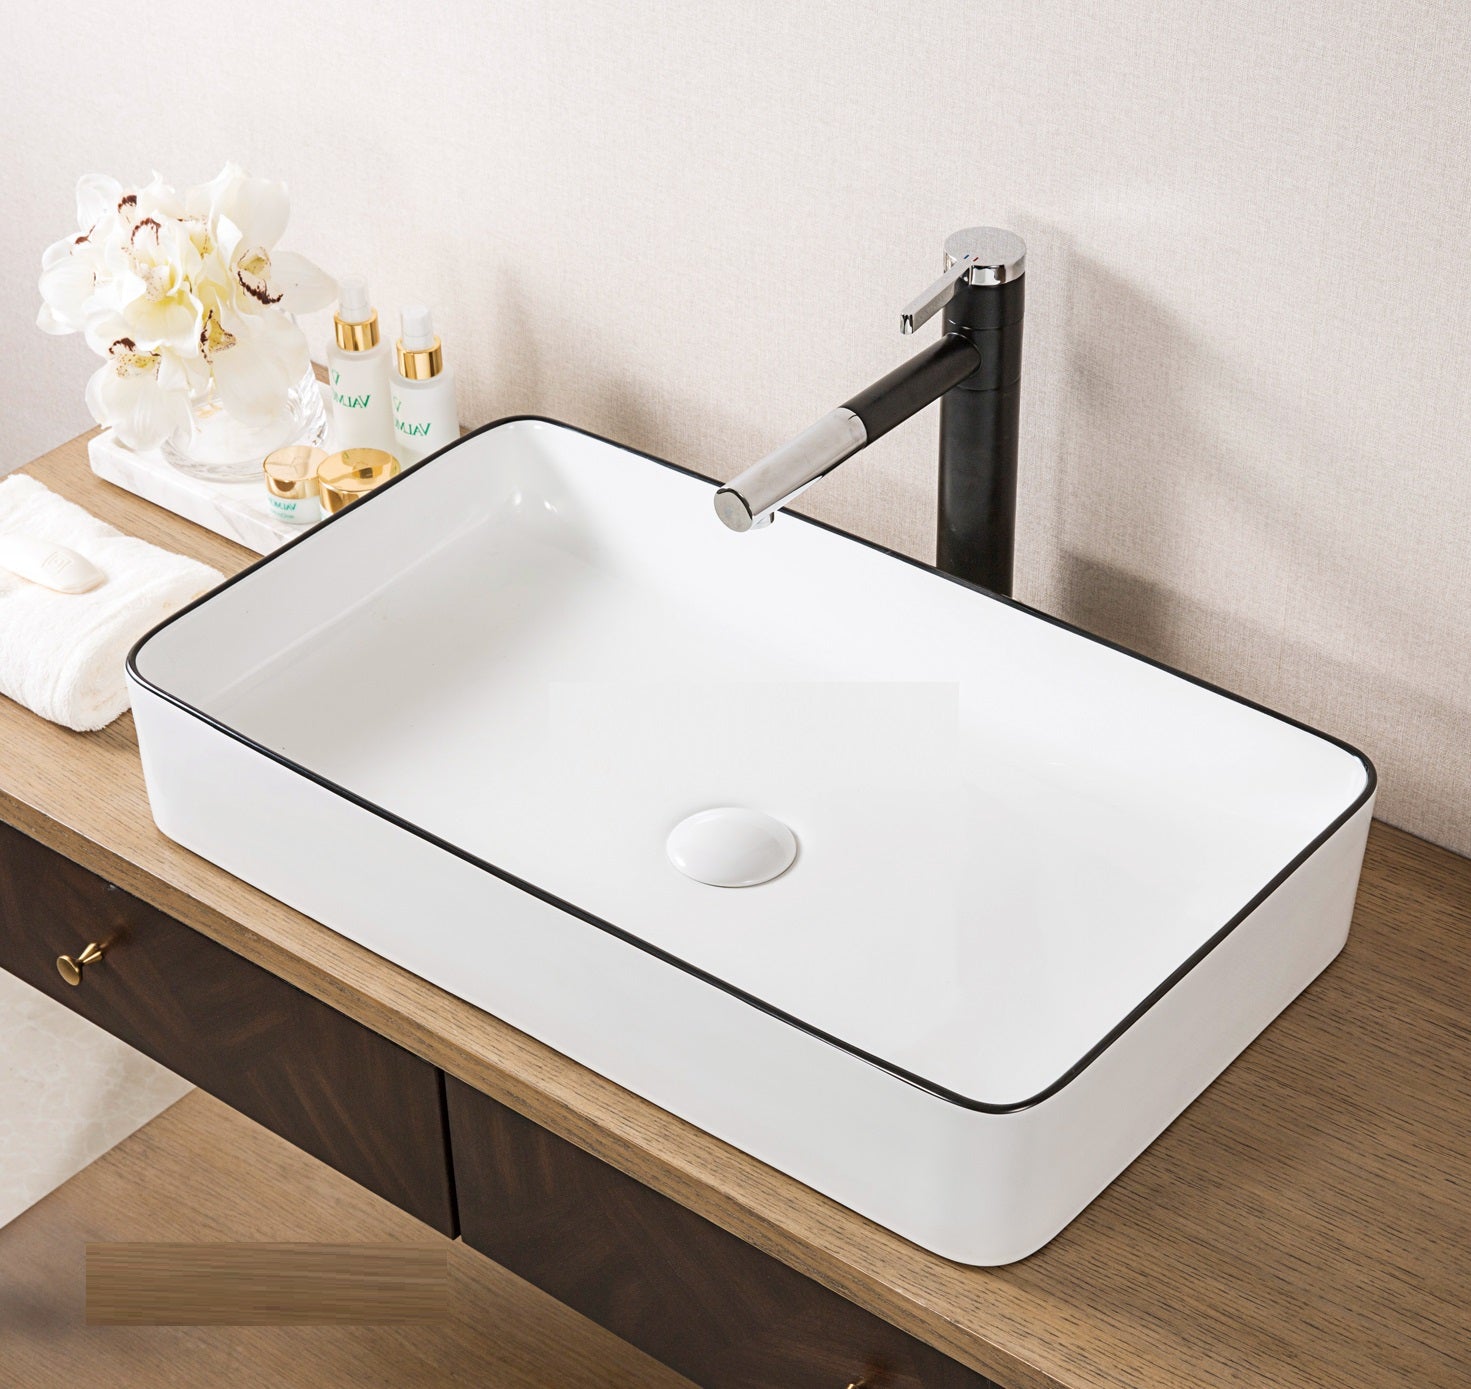 B Backline Ceramic Table Top, Counter Top Wash Basin 24 X 14 X 5 Inch Black White